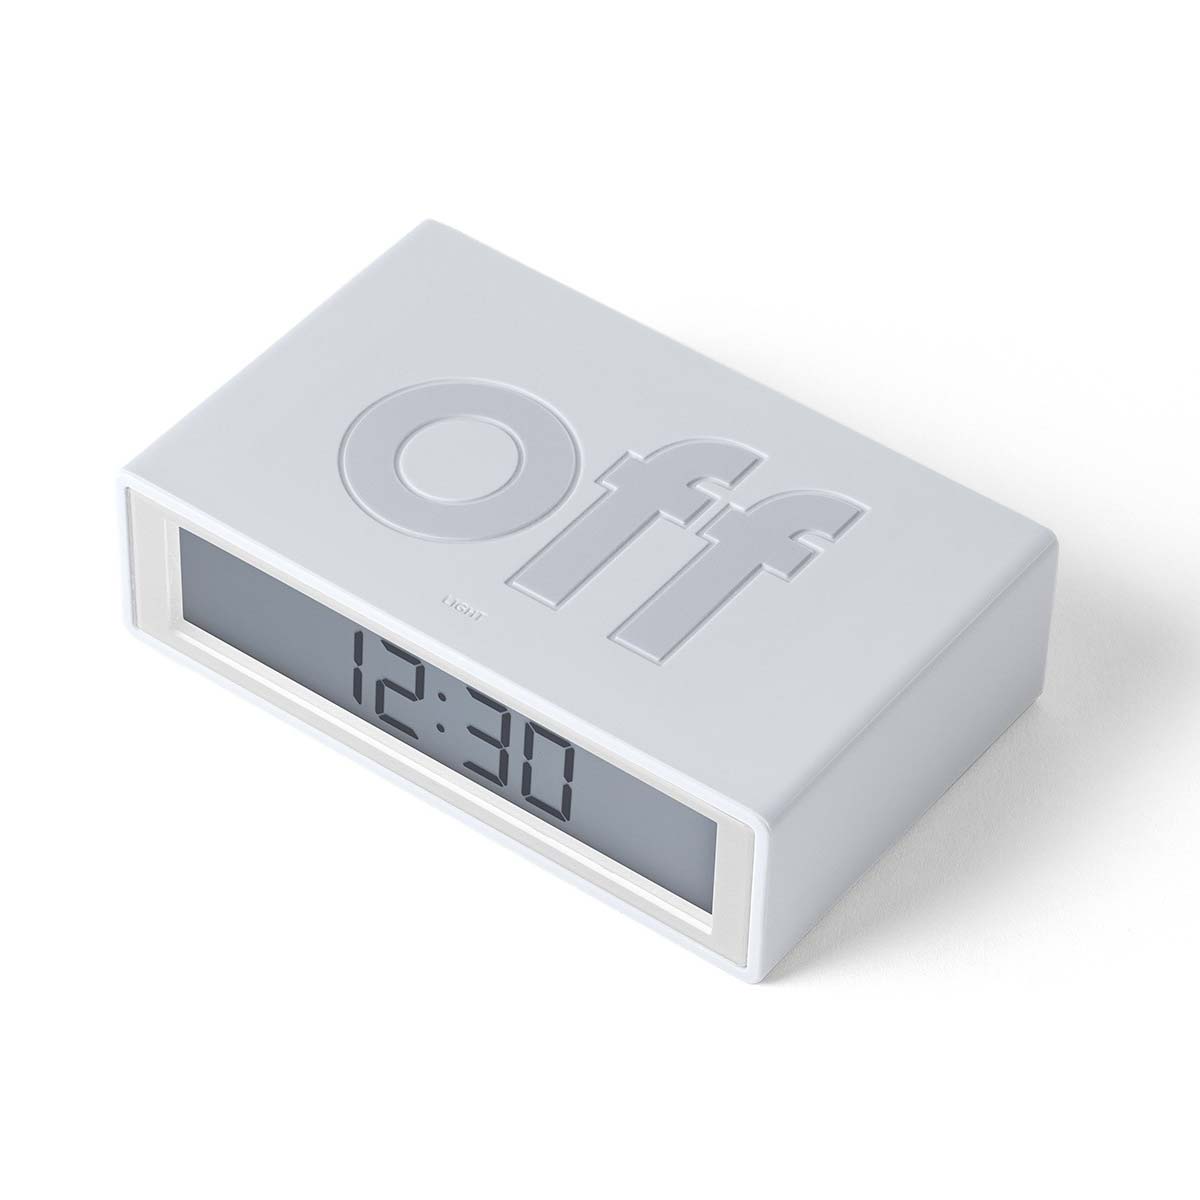 LEXON Flip LCD alarm clock LR150W9 white | the design gift shop